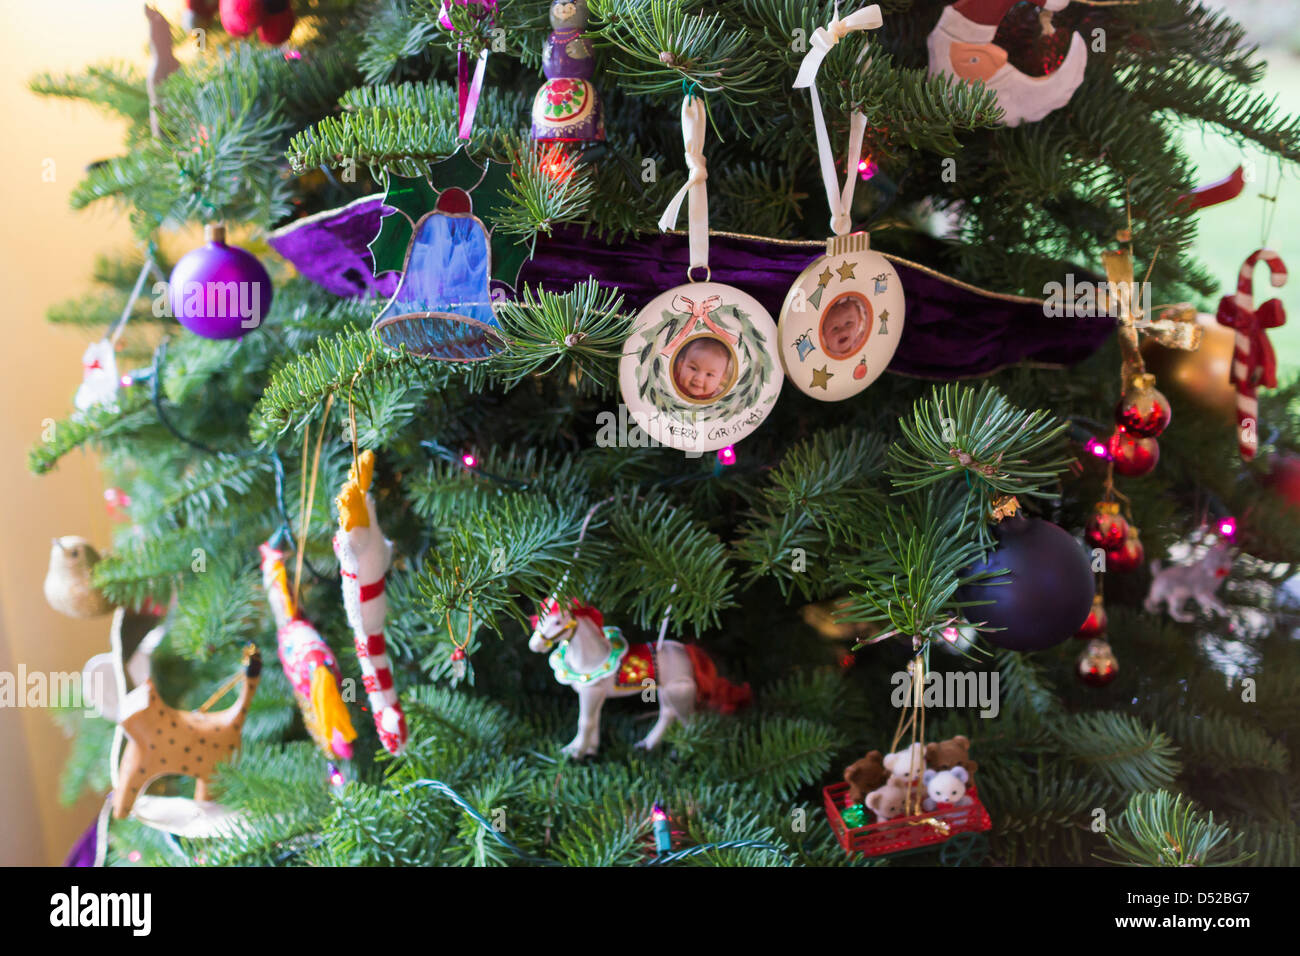 Ornaments on Christmas tree Stock Photo